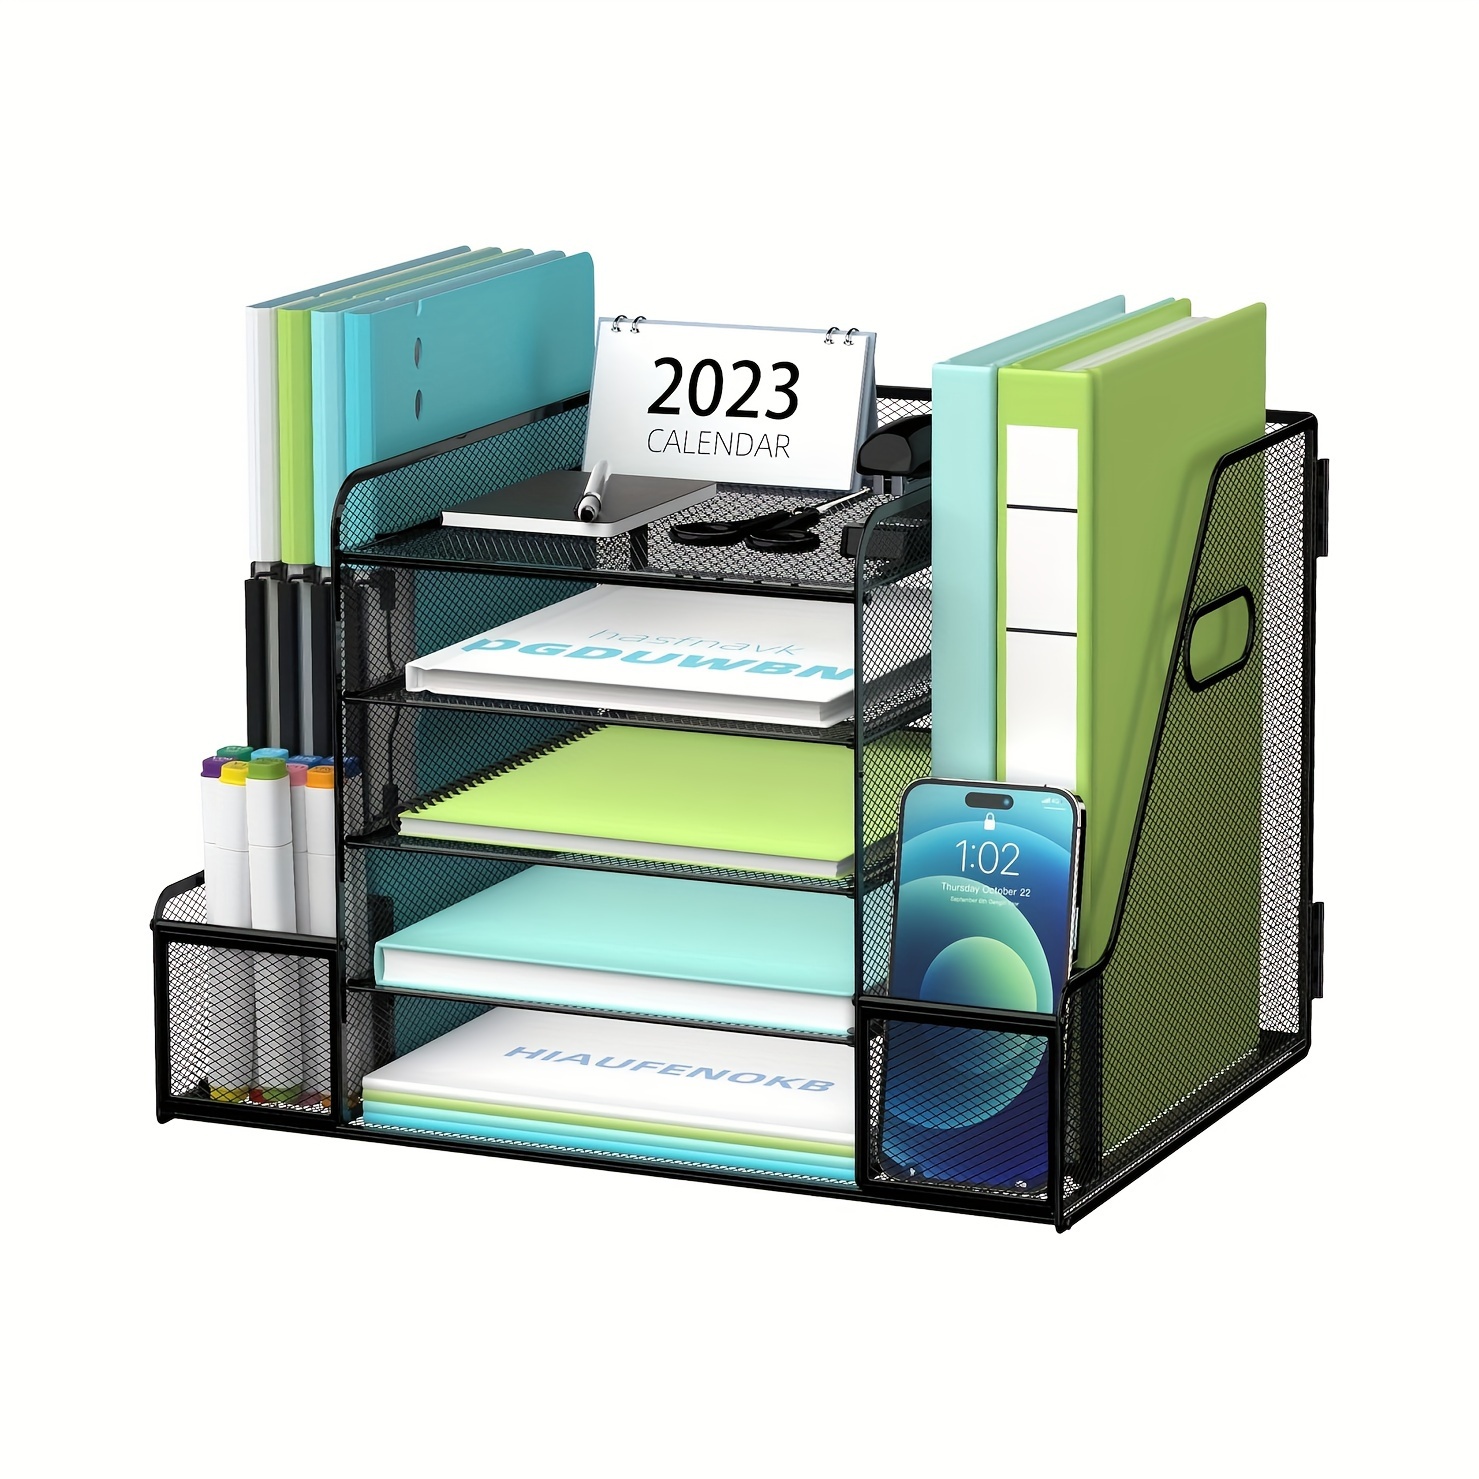 

Mesh Desk Organizer With File Holder, 5-tier Paper Letter Tray Organizer With Magazine Holder, Desktop Storage And Storage Office Supplies Home Or School